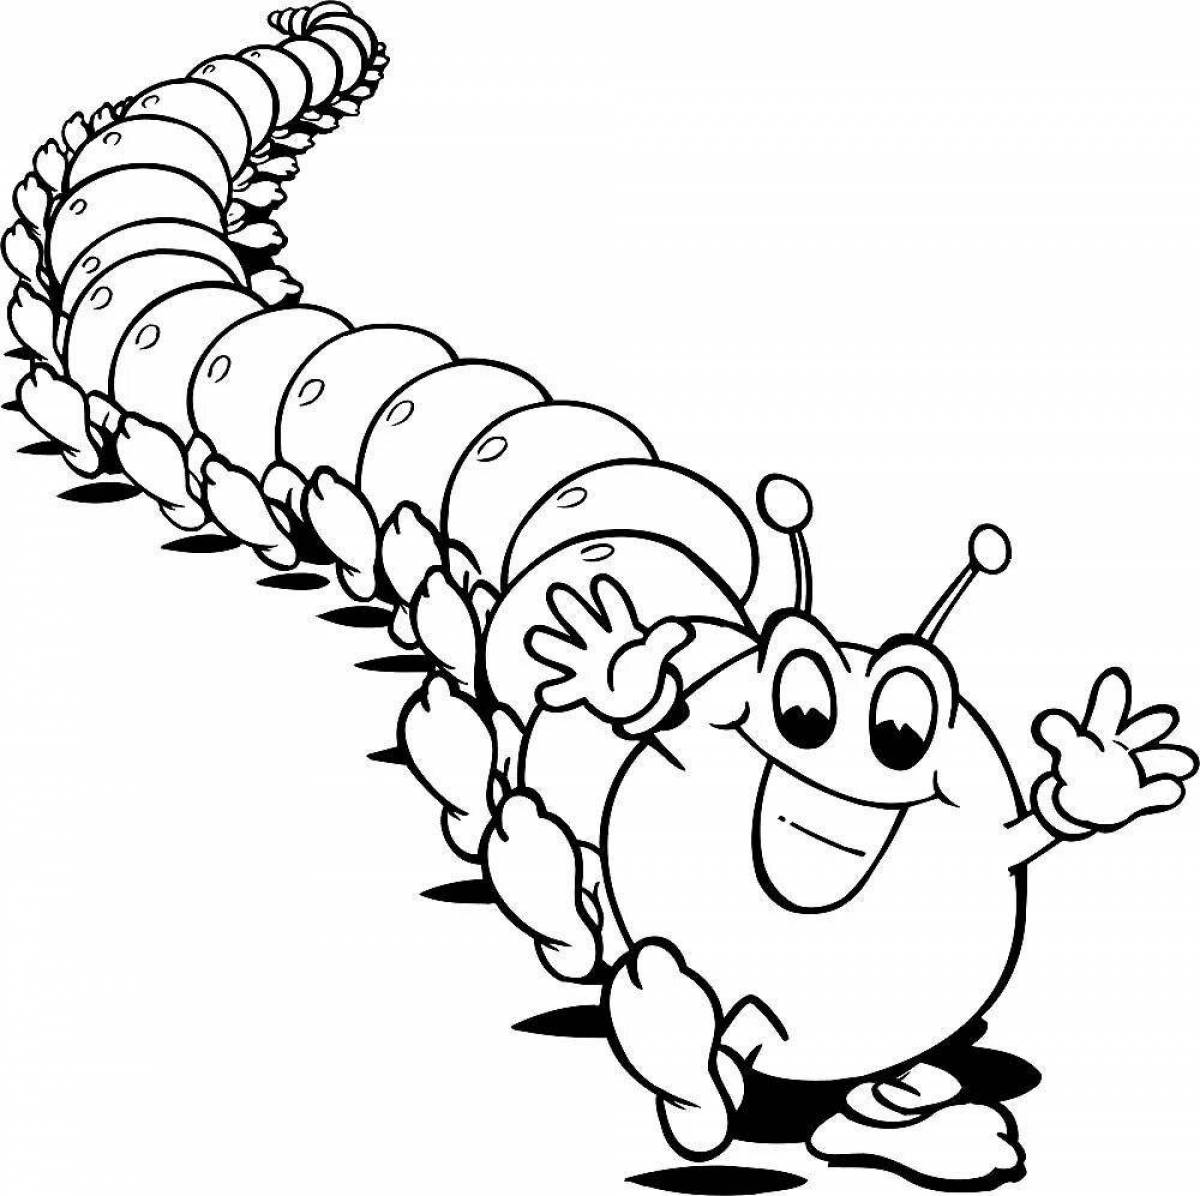 Centipede fun coloring book